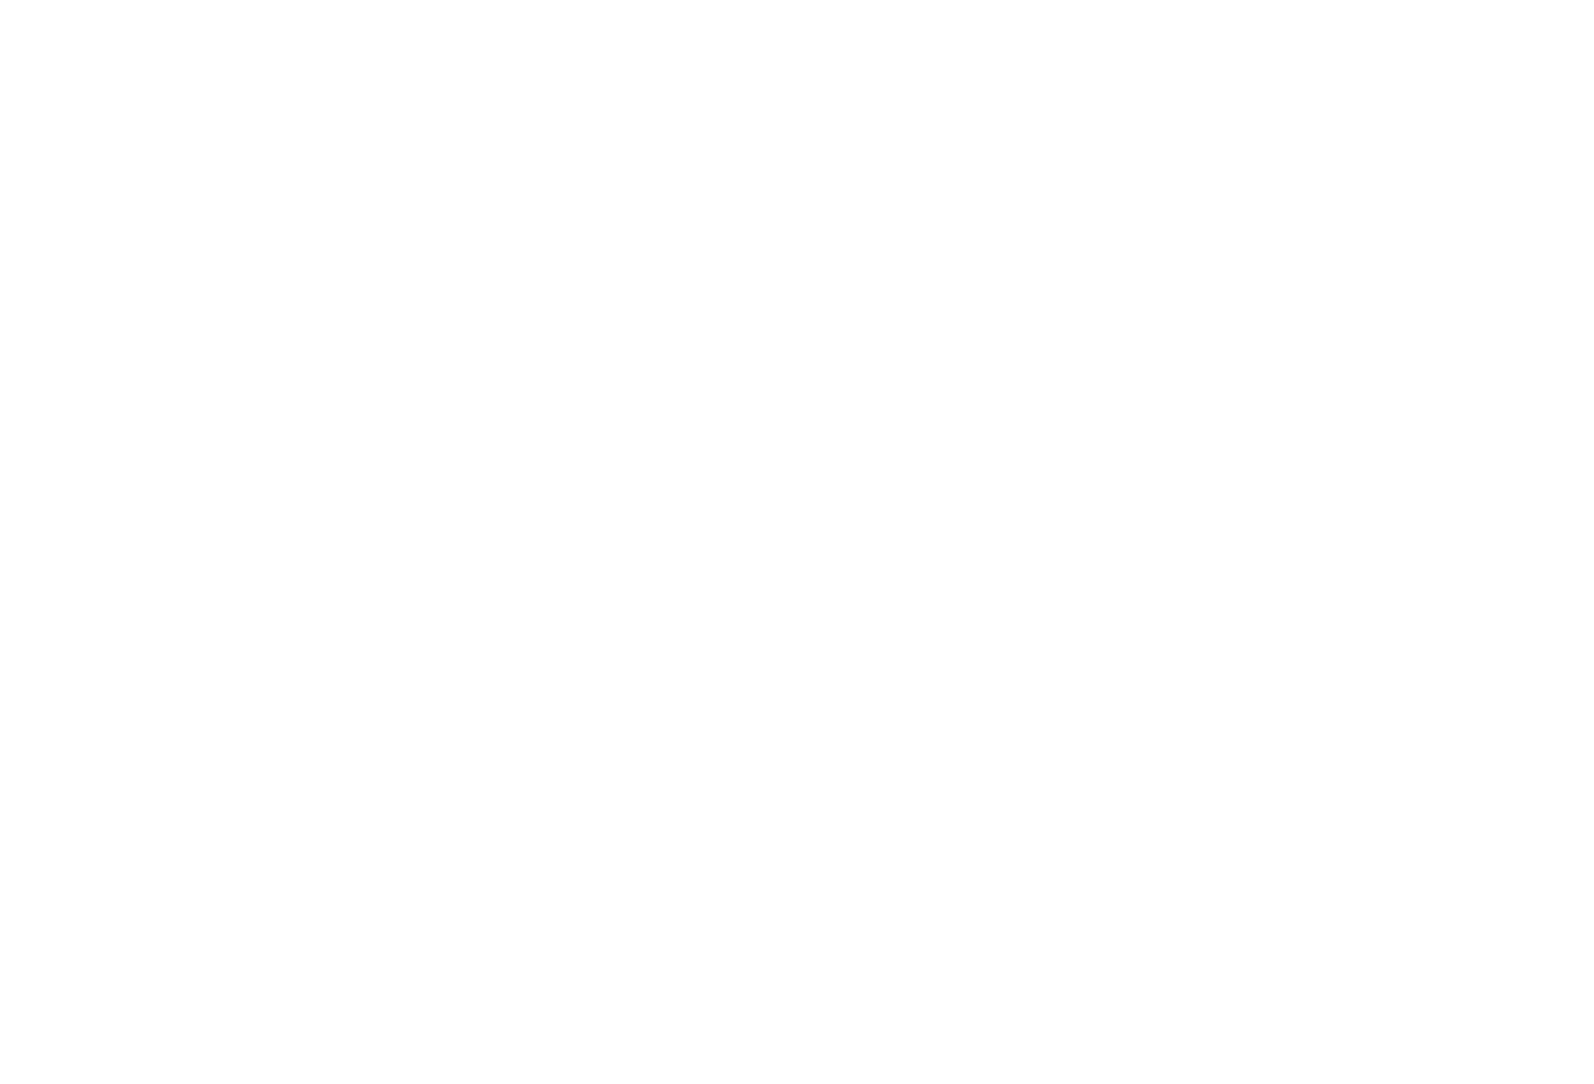 AbbVie logo for dark backgrounds (transparent PNG)